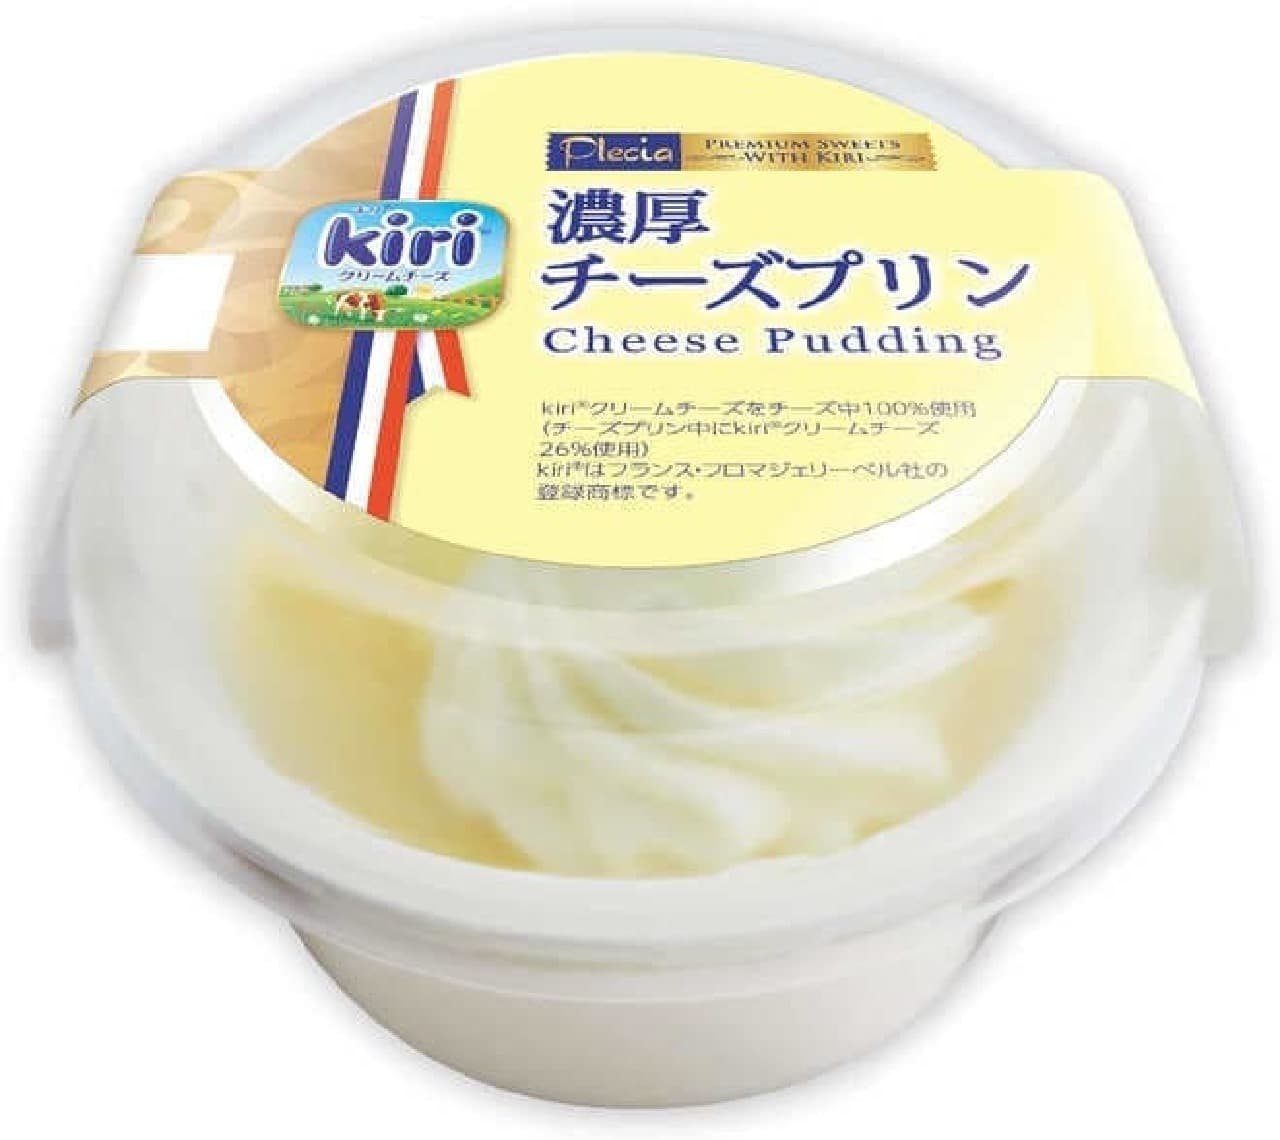 new kiri cheese sweets "rich cheese pudding"